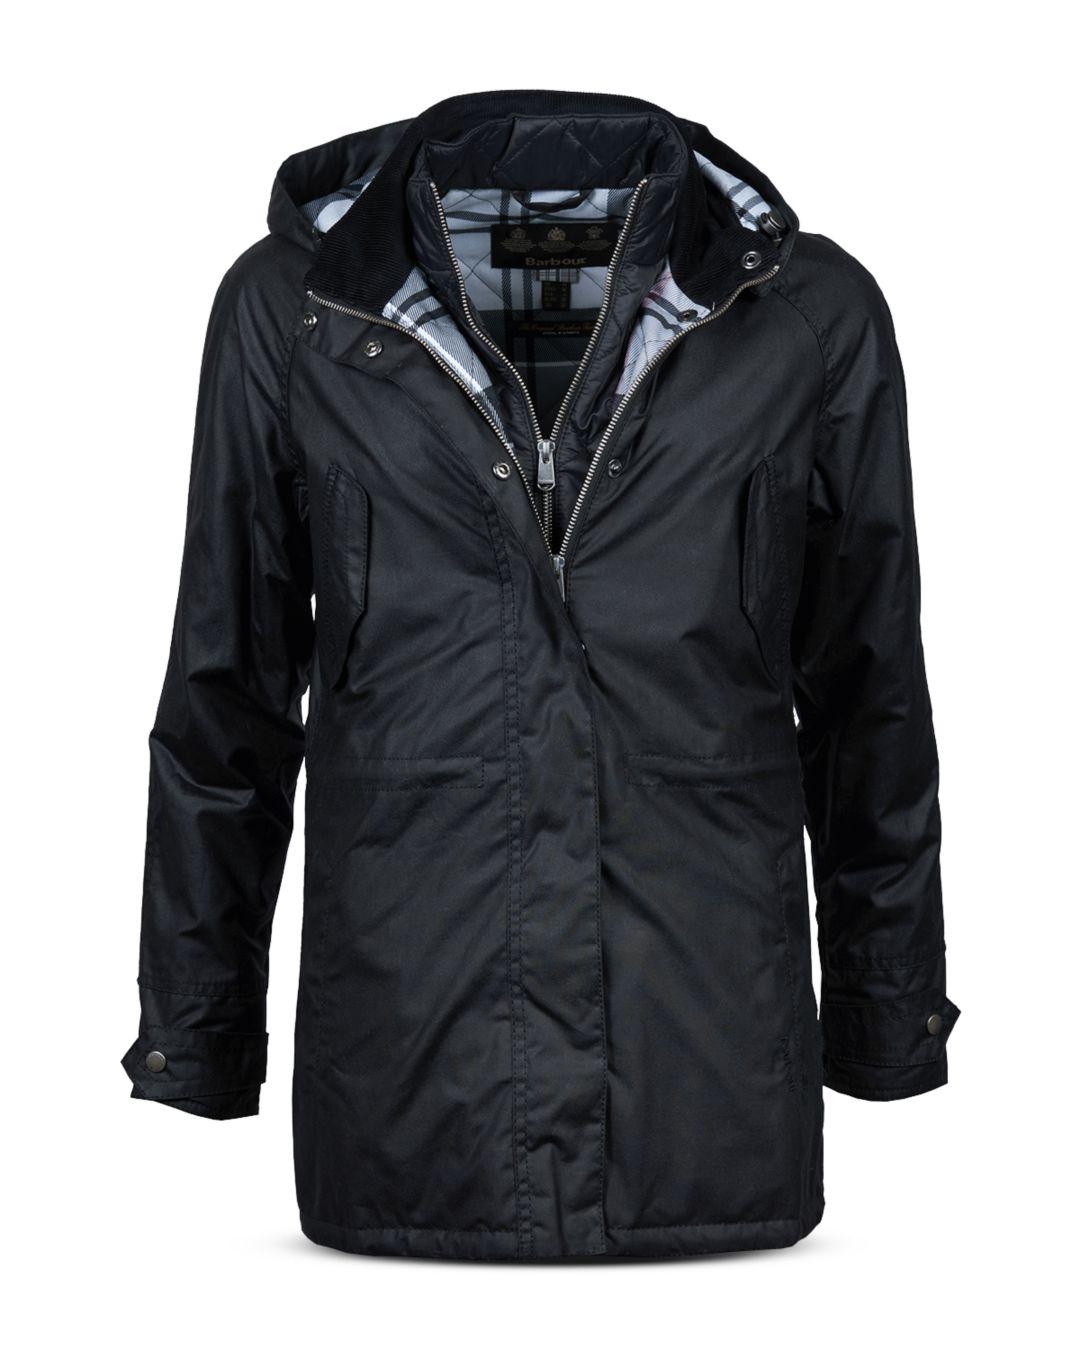 Barbour Heath Waxed Cotton Rain Jacket in Black - Lyst